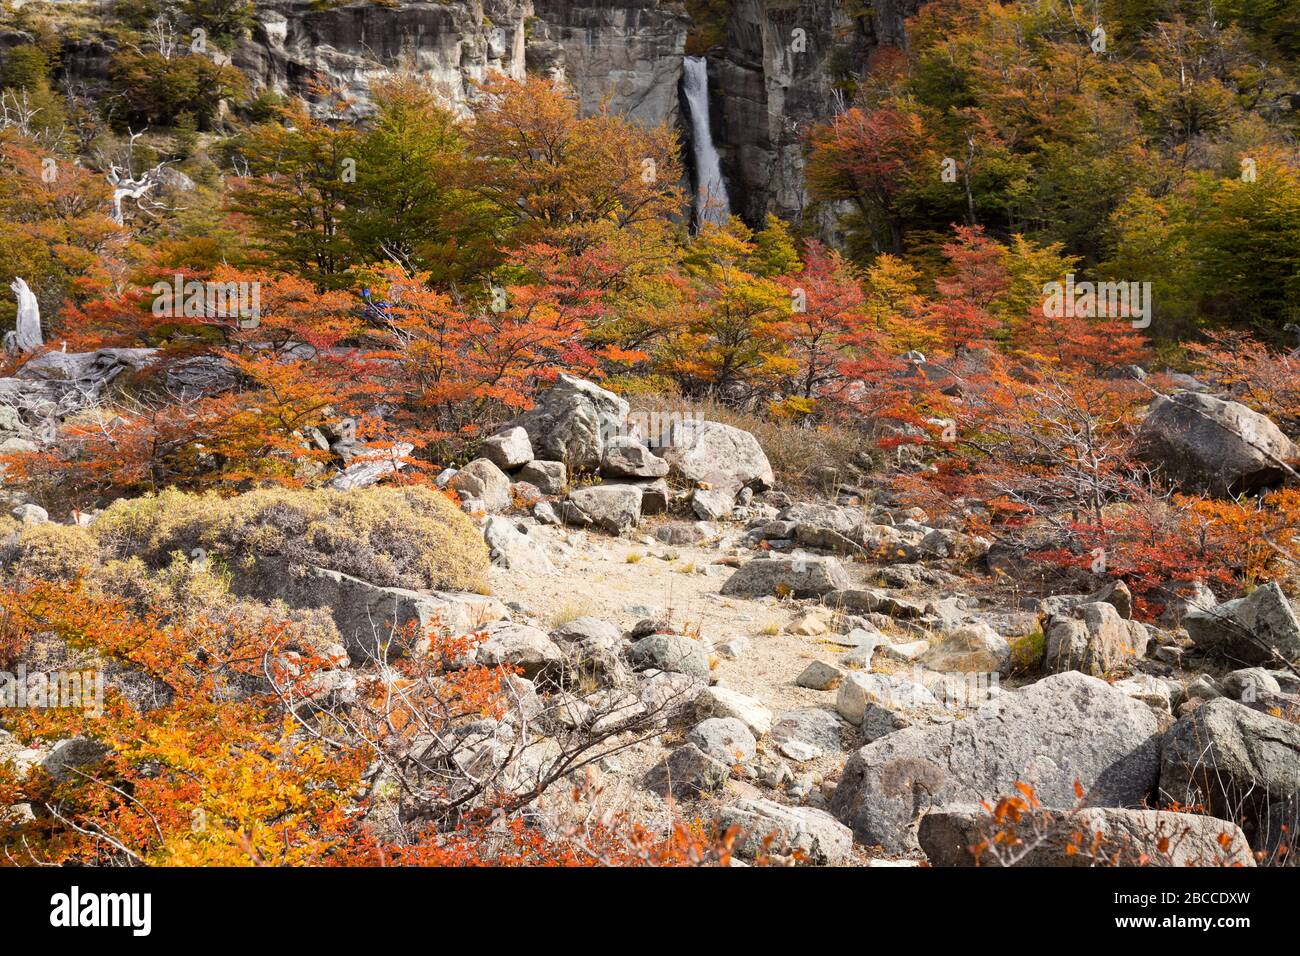 Autumn colors of vegetation around the Chorrillo del Salto waterfall, National Park de los Glaciares, Argentina Stock Photo